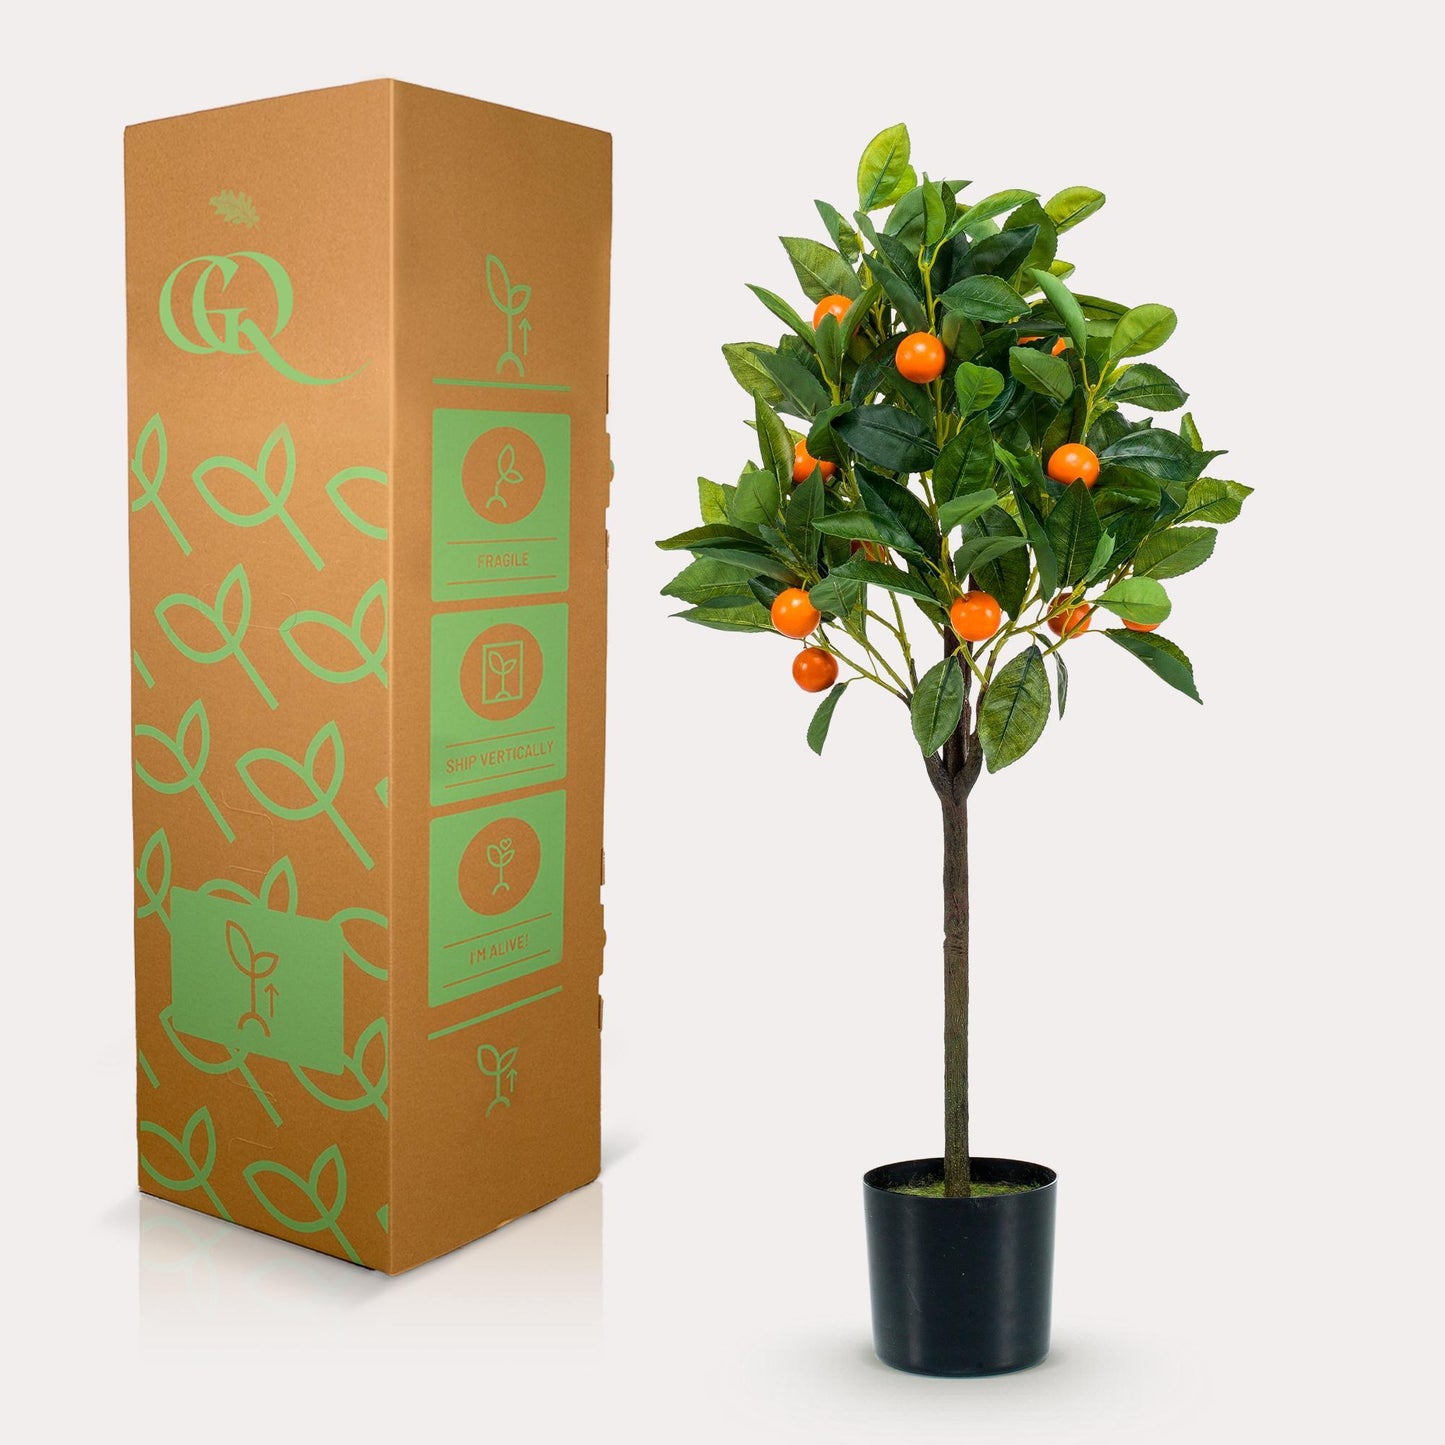 Kunstplant - Citrus Sinensis - Sinaasappelboom - 75 cm Kunstplant - Citrus Sinensis - Sinaasappelboom - 75 cm